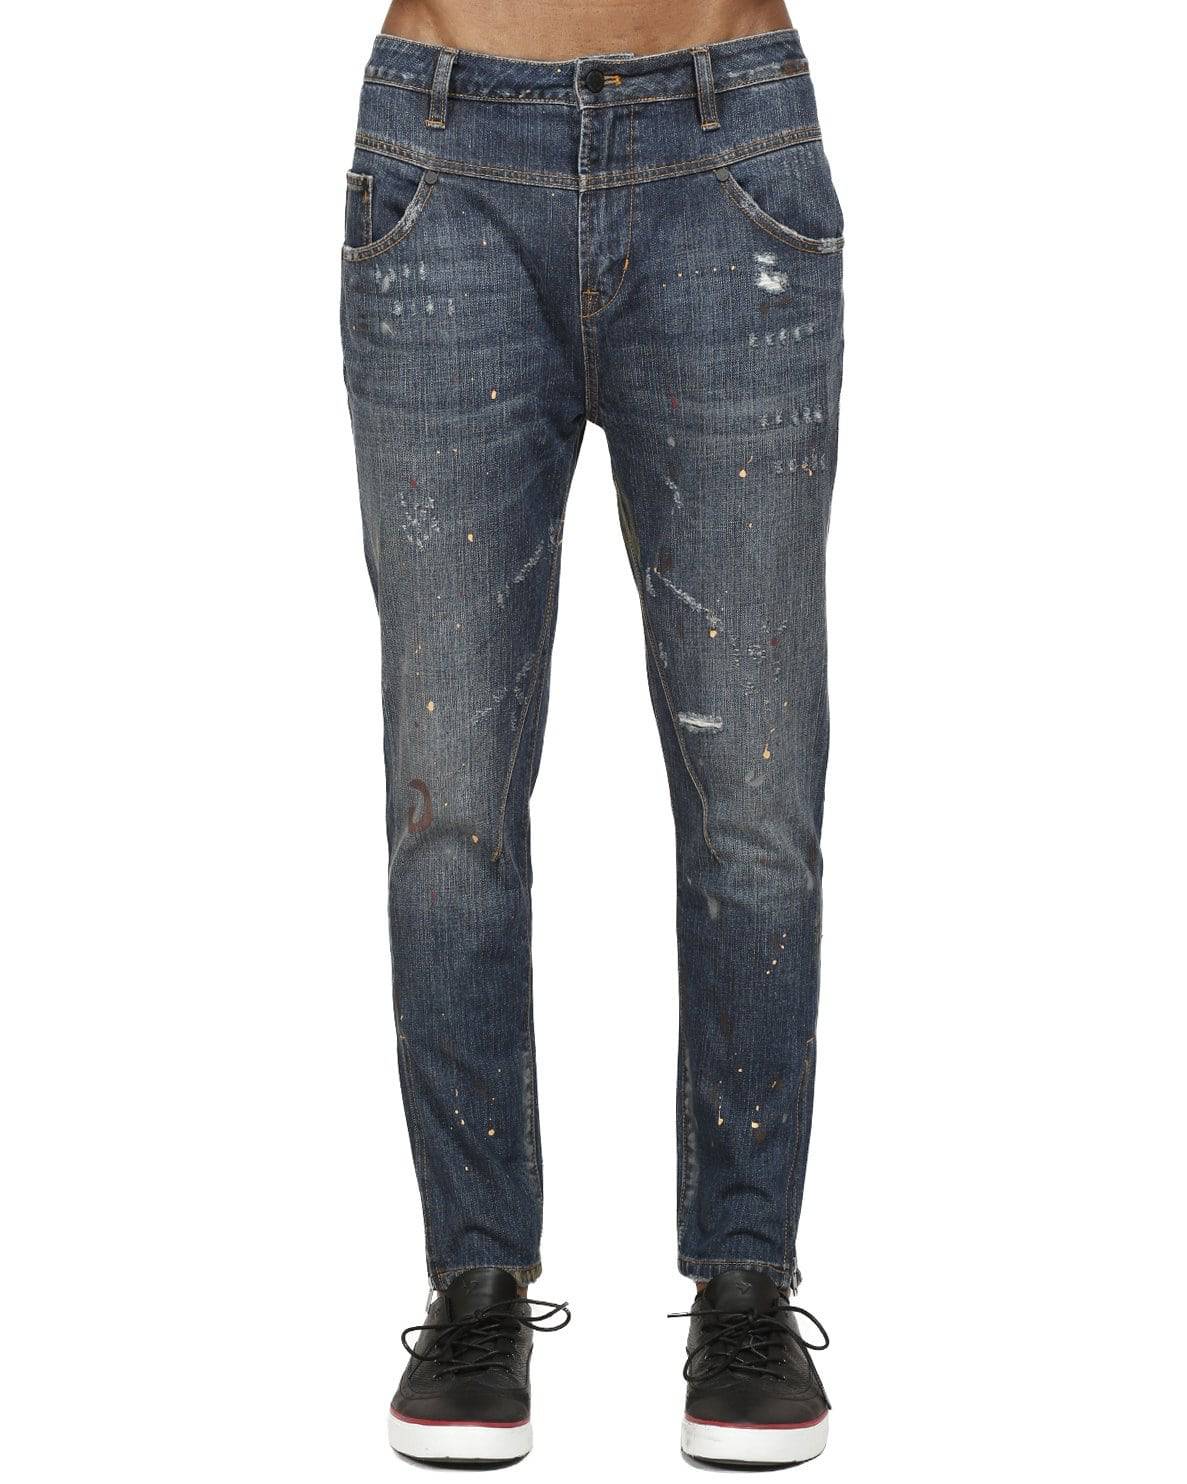 Konus Men's Side Zip Paint Splatter Jeans by Shop at Konus